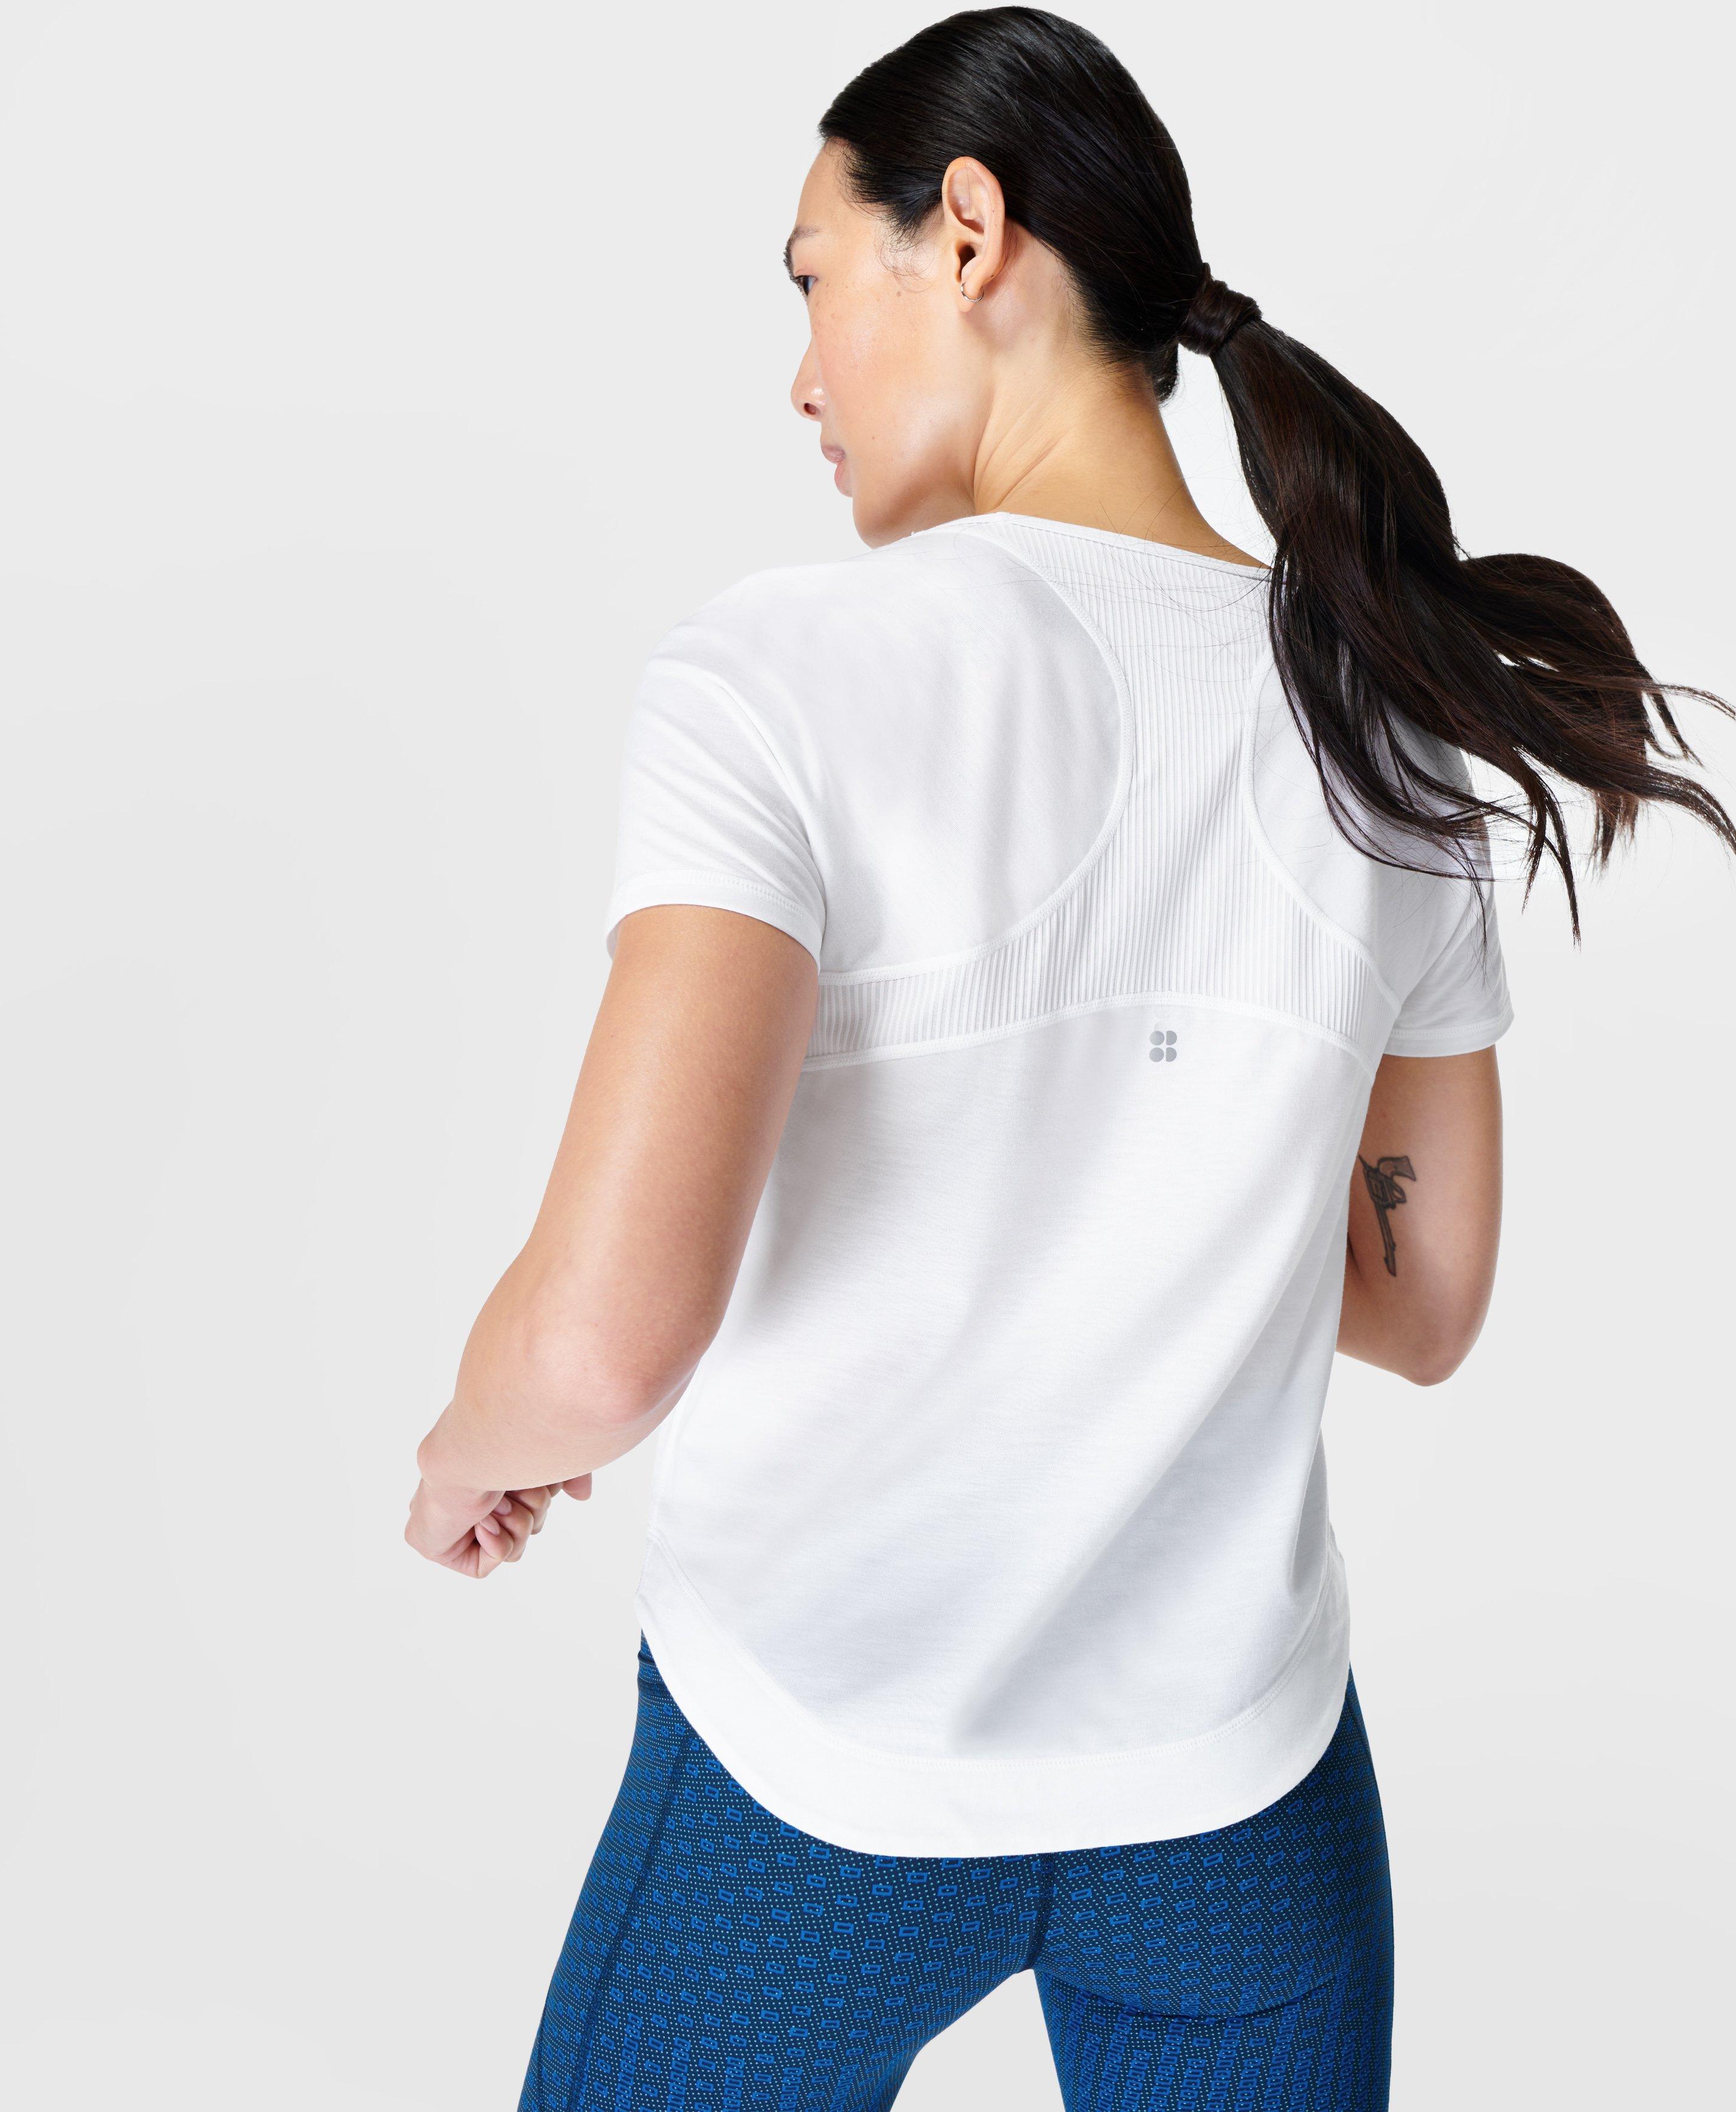 Breathe Easy Running T-Shirt - White, Women's T-Shirts